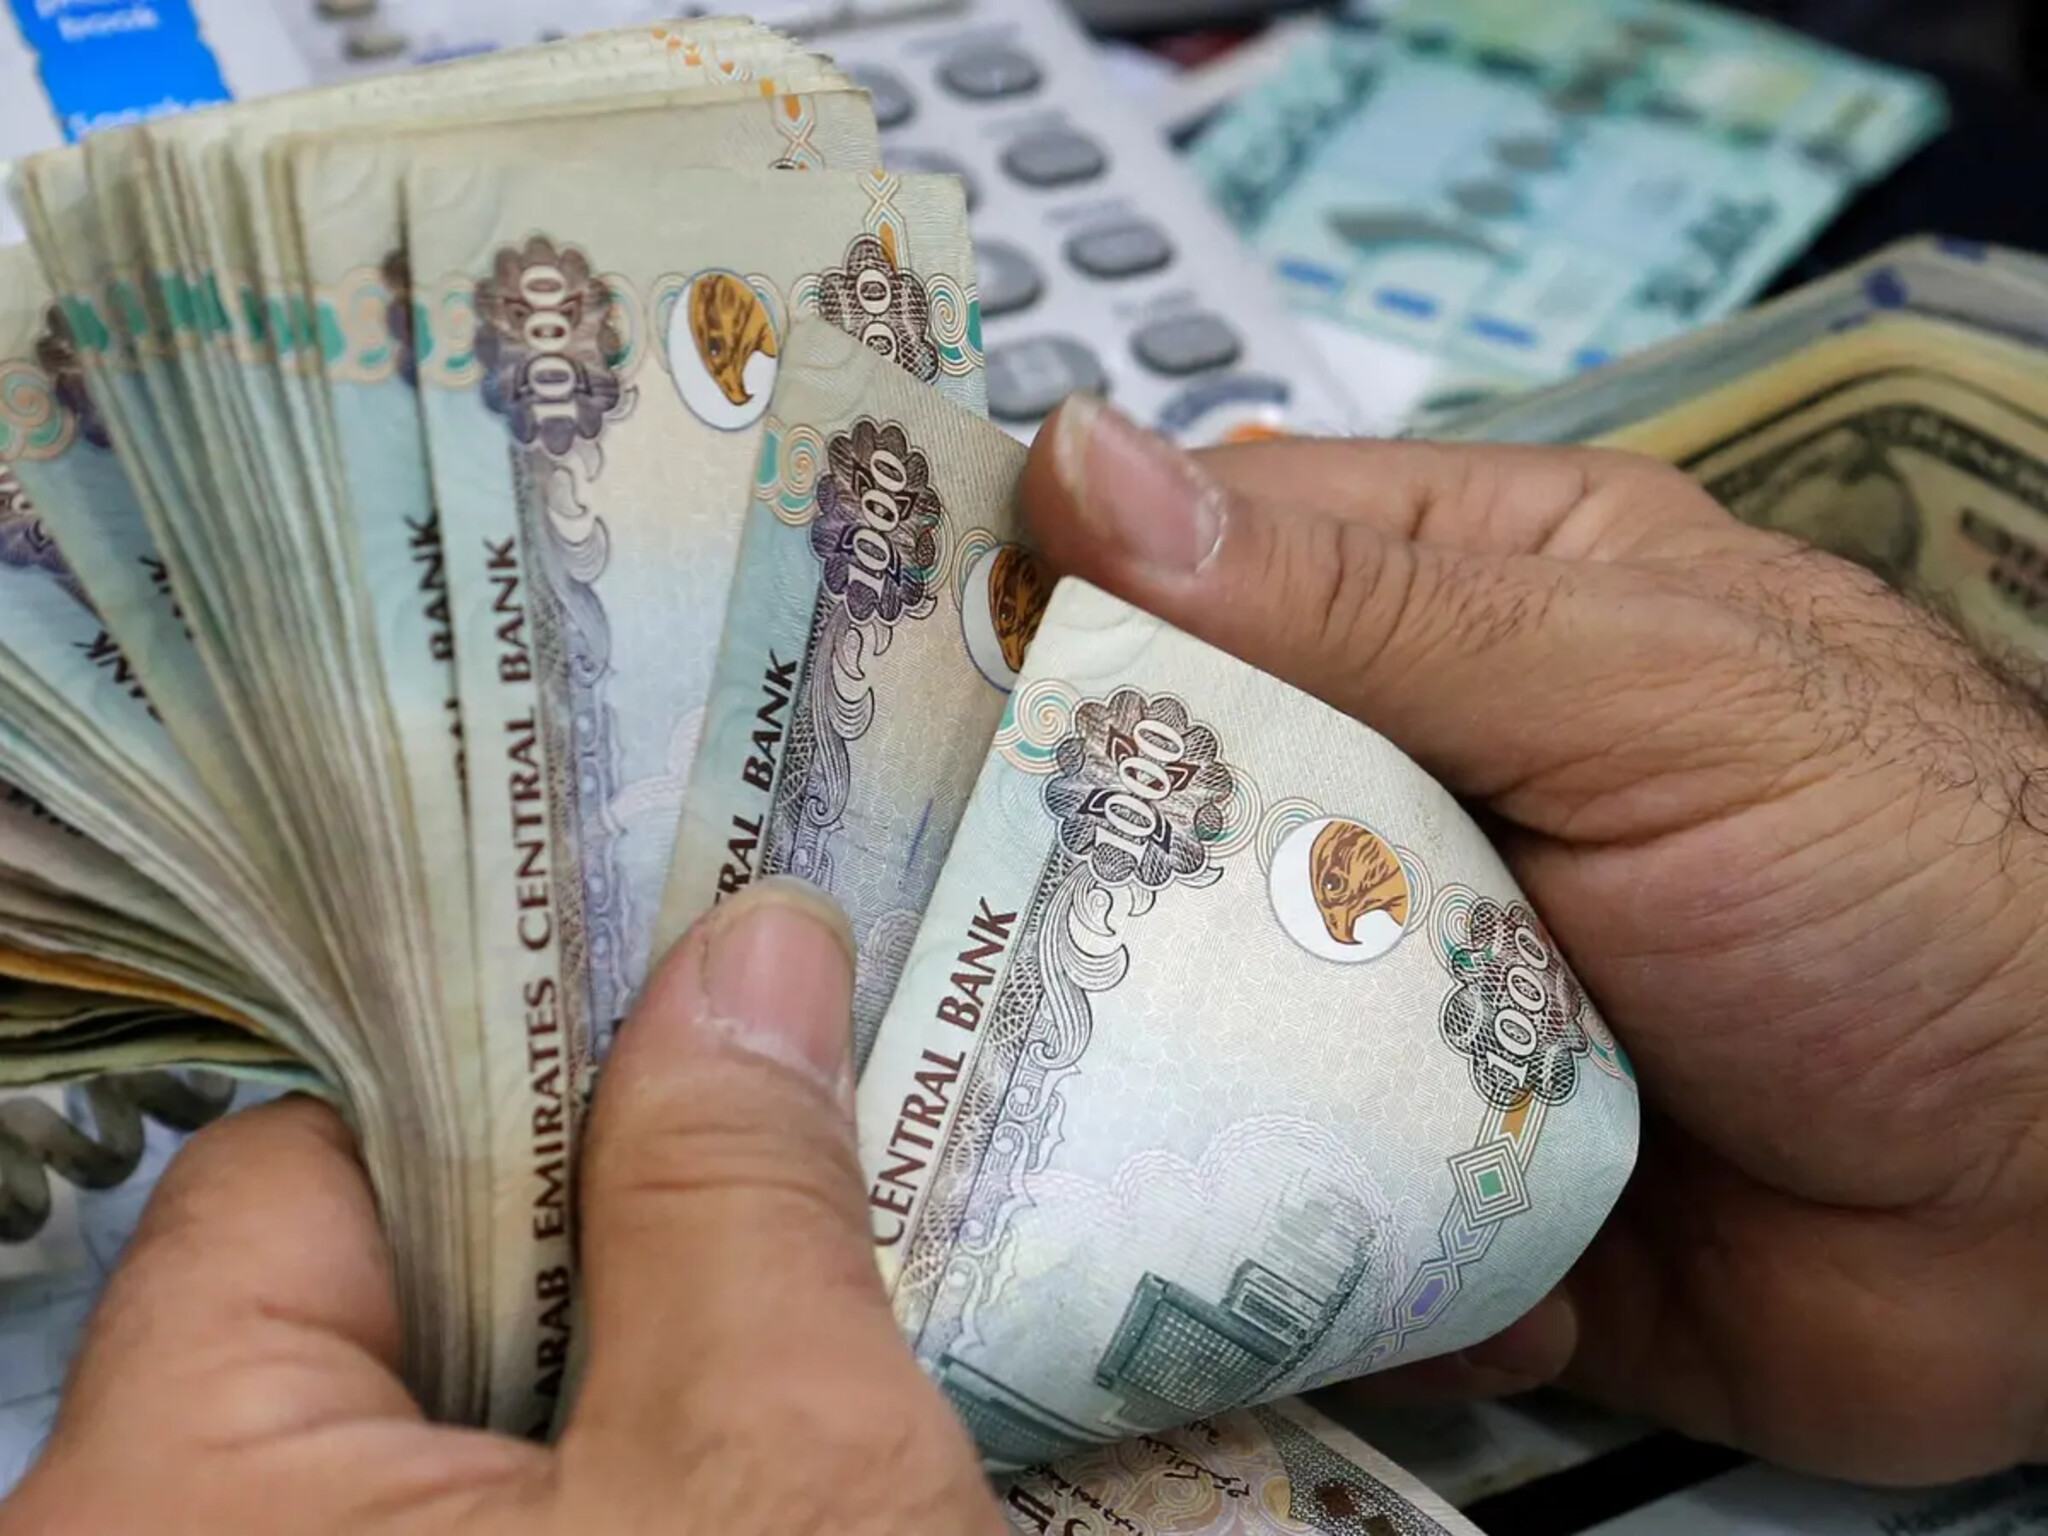 Dubai court: an Arab accused of embezzling 500,000 dirhams